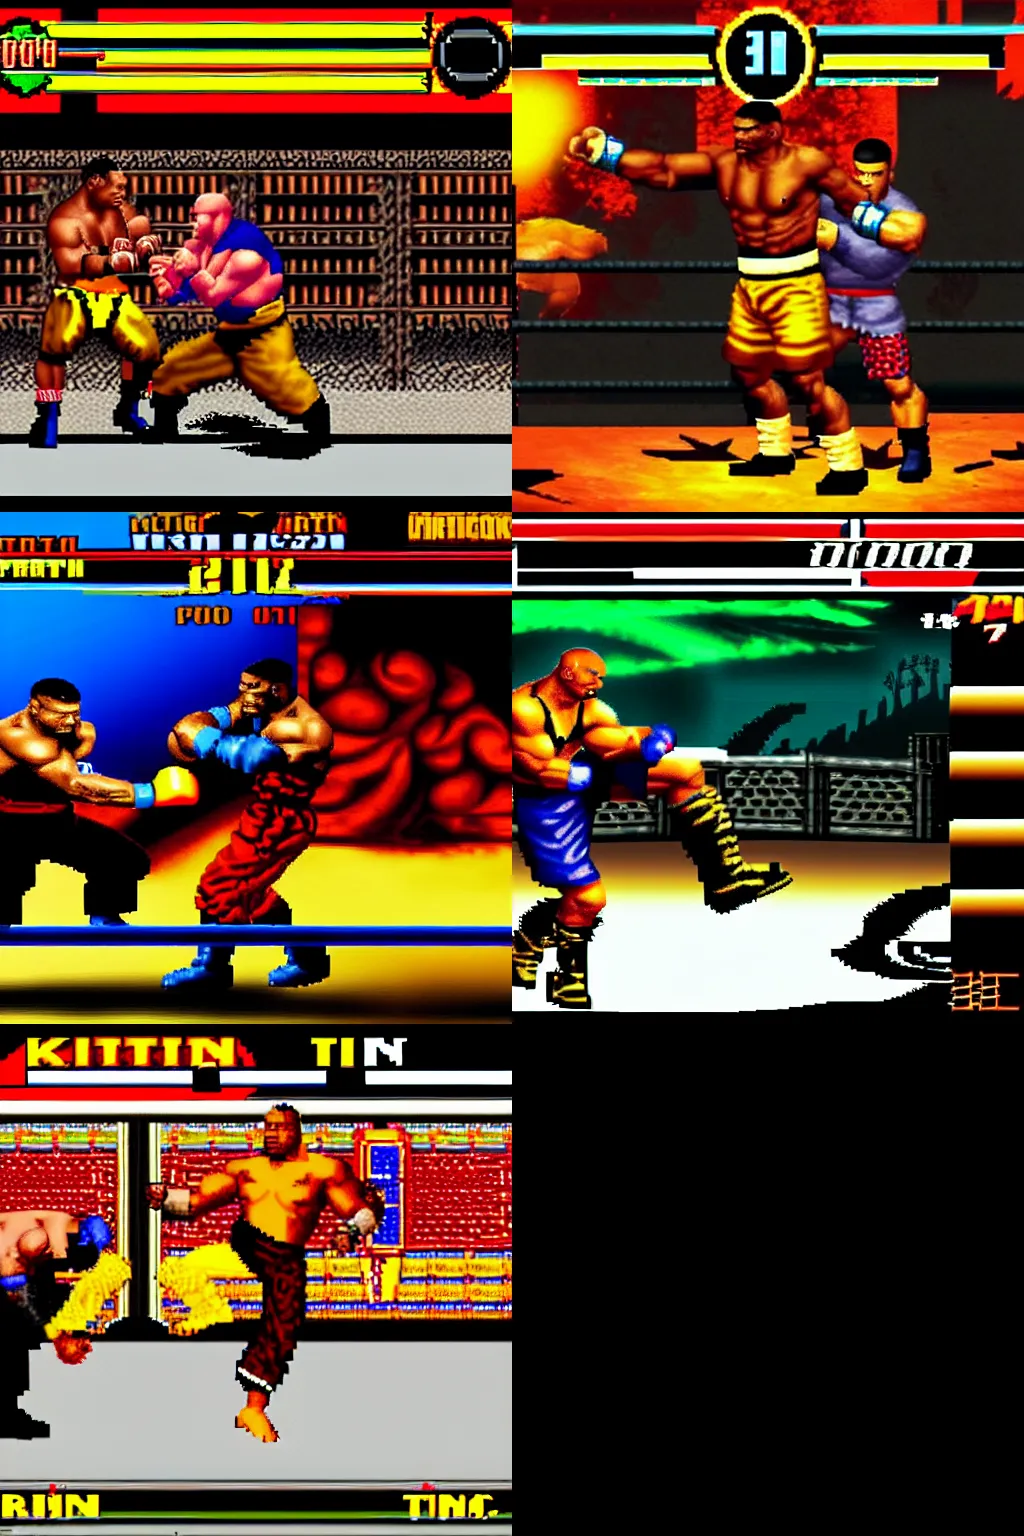 Prompt: mike tyson in mortal kombat 2 fighting arcade game, screenshot